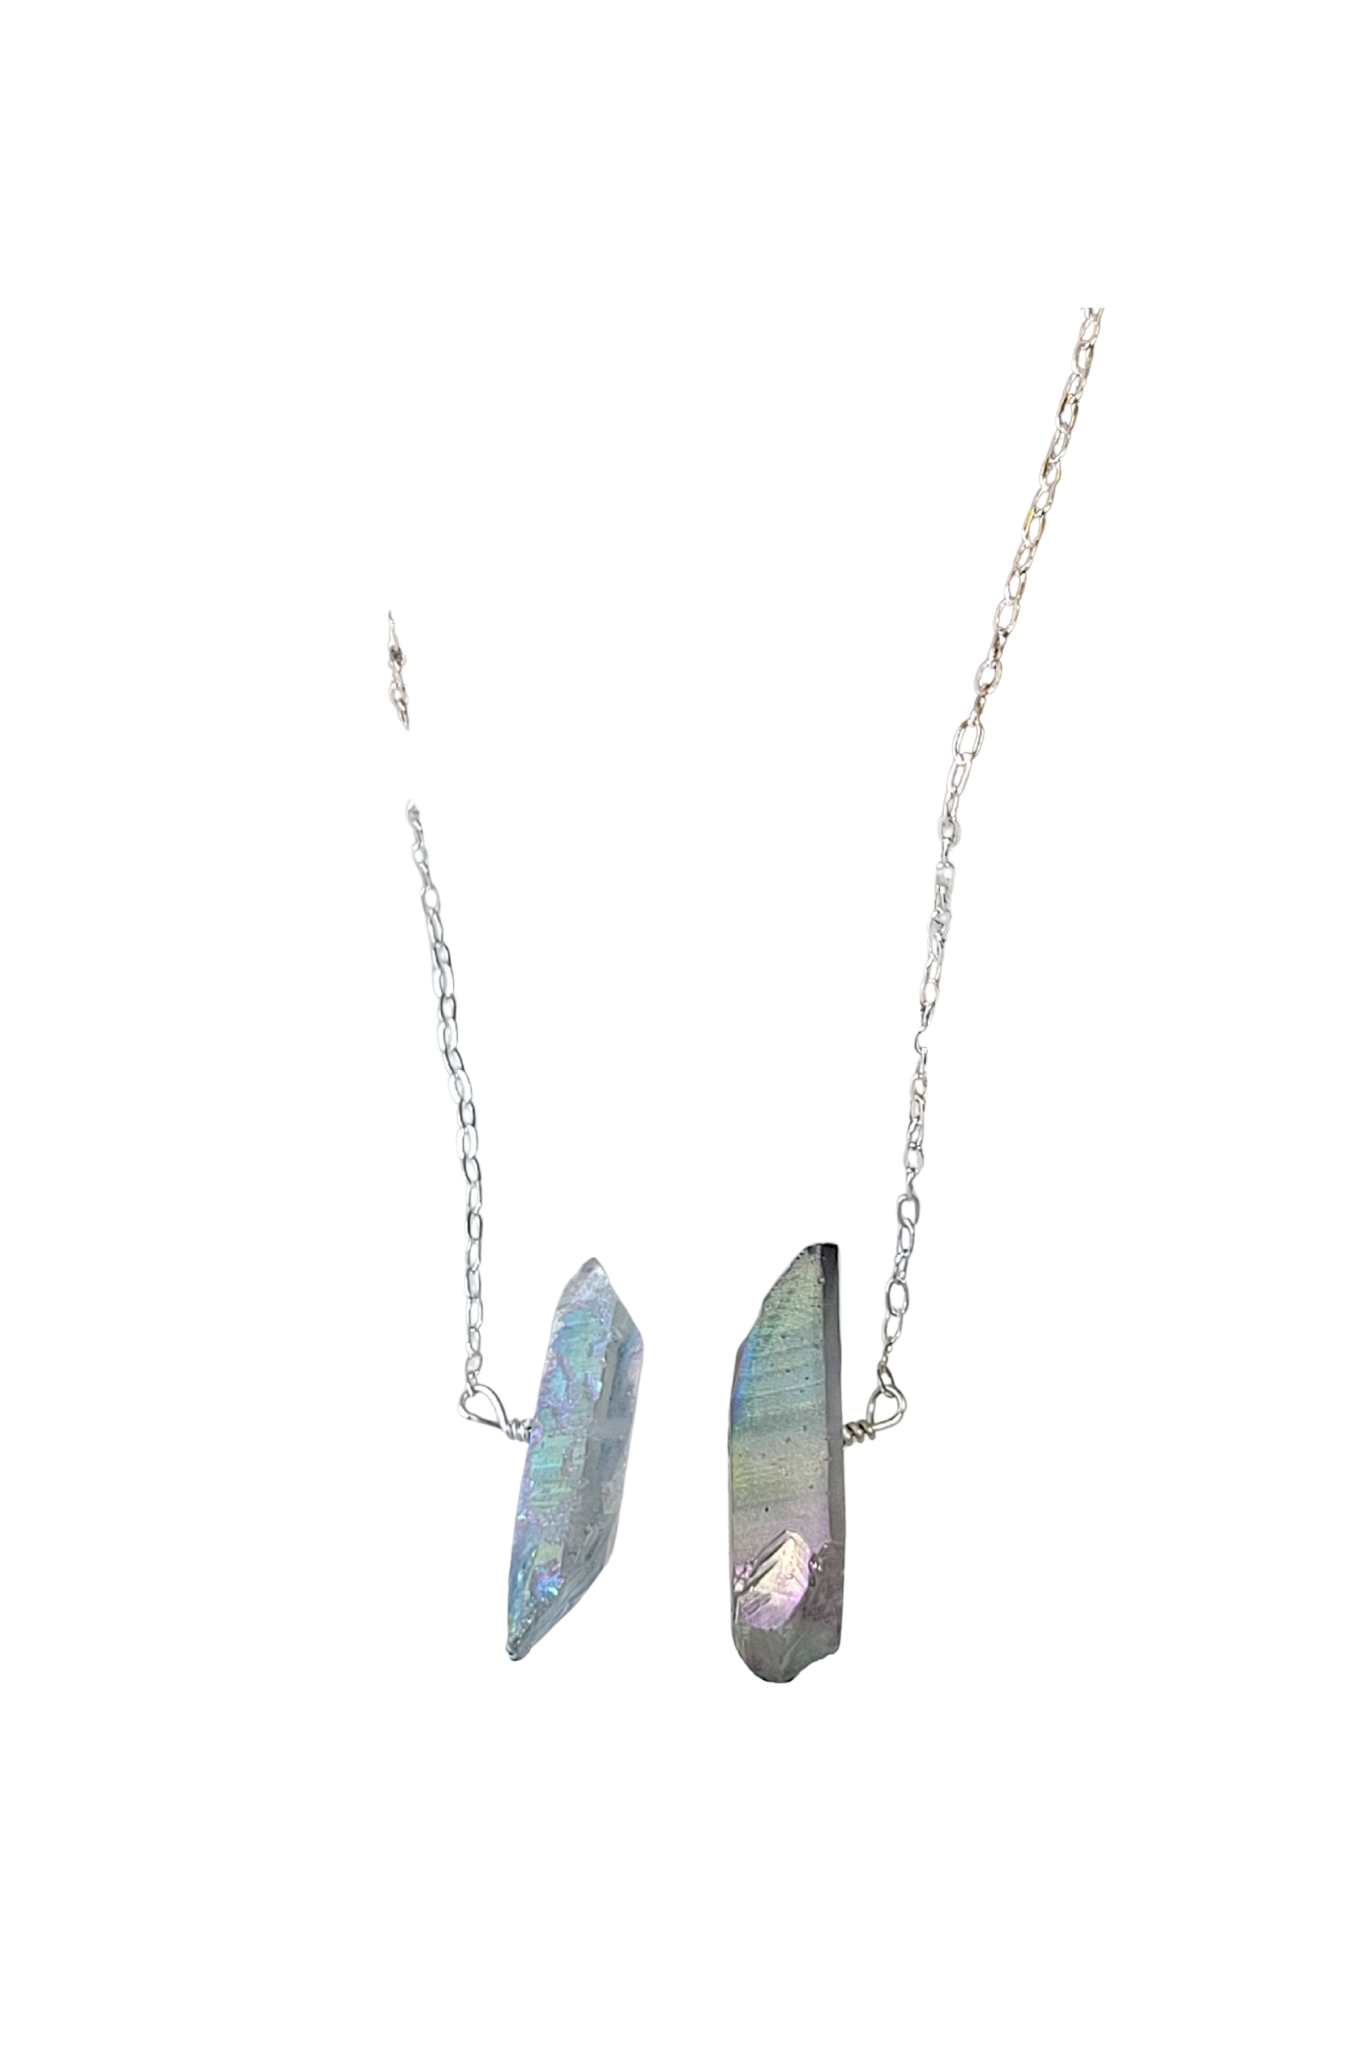 Three Raw Quartz Crystal Pendant Necklace with Mystic Grey and Rainbow Quartz in Silver